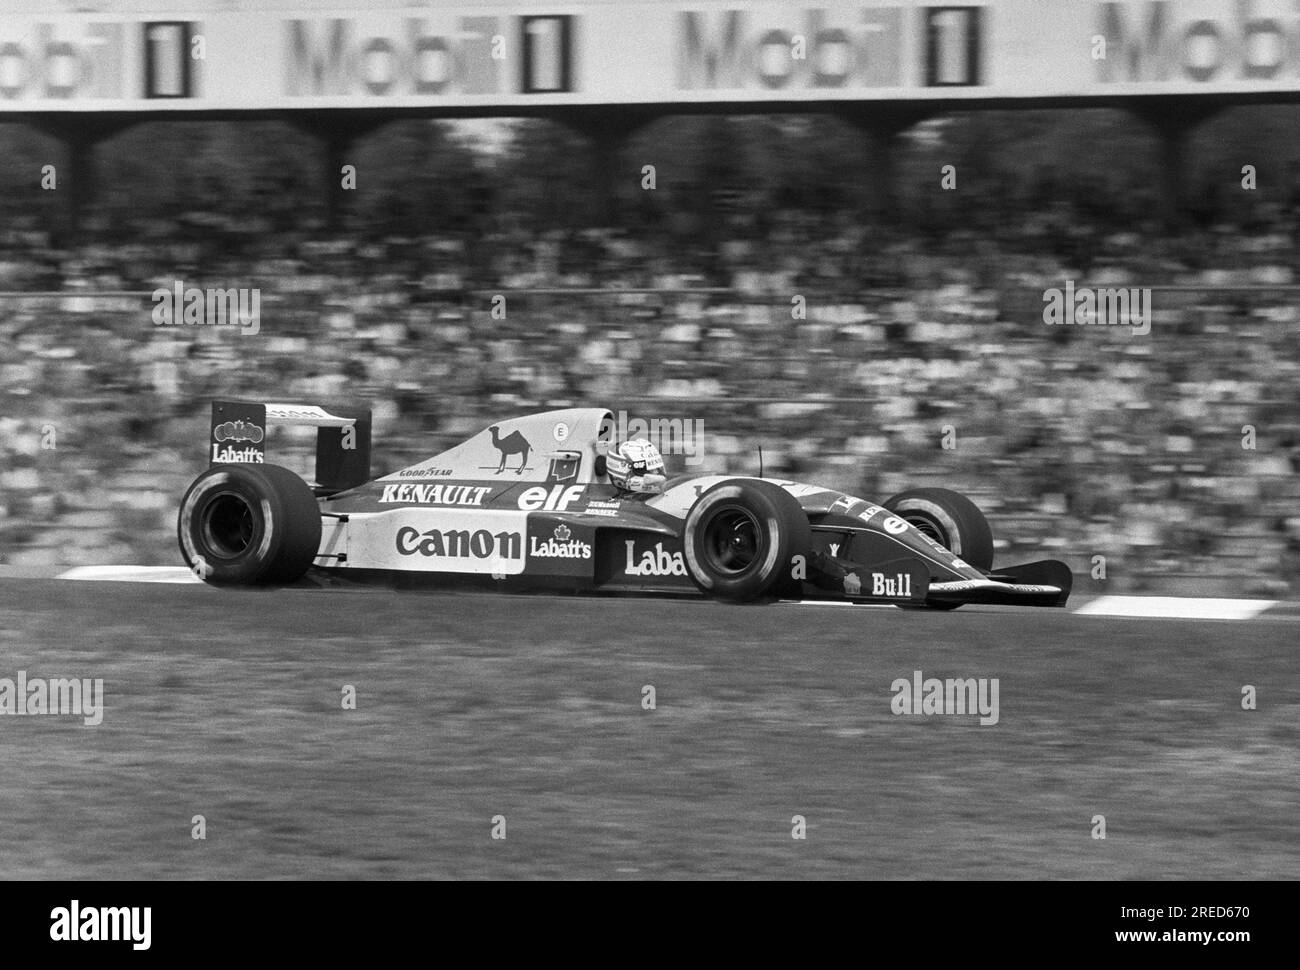 Germania, Hockenheim, 15/07/1992 Archivio: 35-58-09 test drive di Formula 1 presso l'Hockenheimring foto: Nigel Mansell, Williams Renault [traduzione automatica] Foto Stock